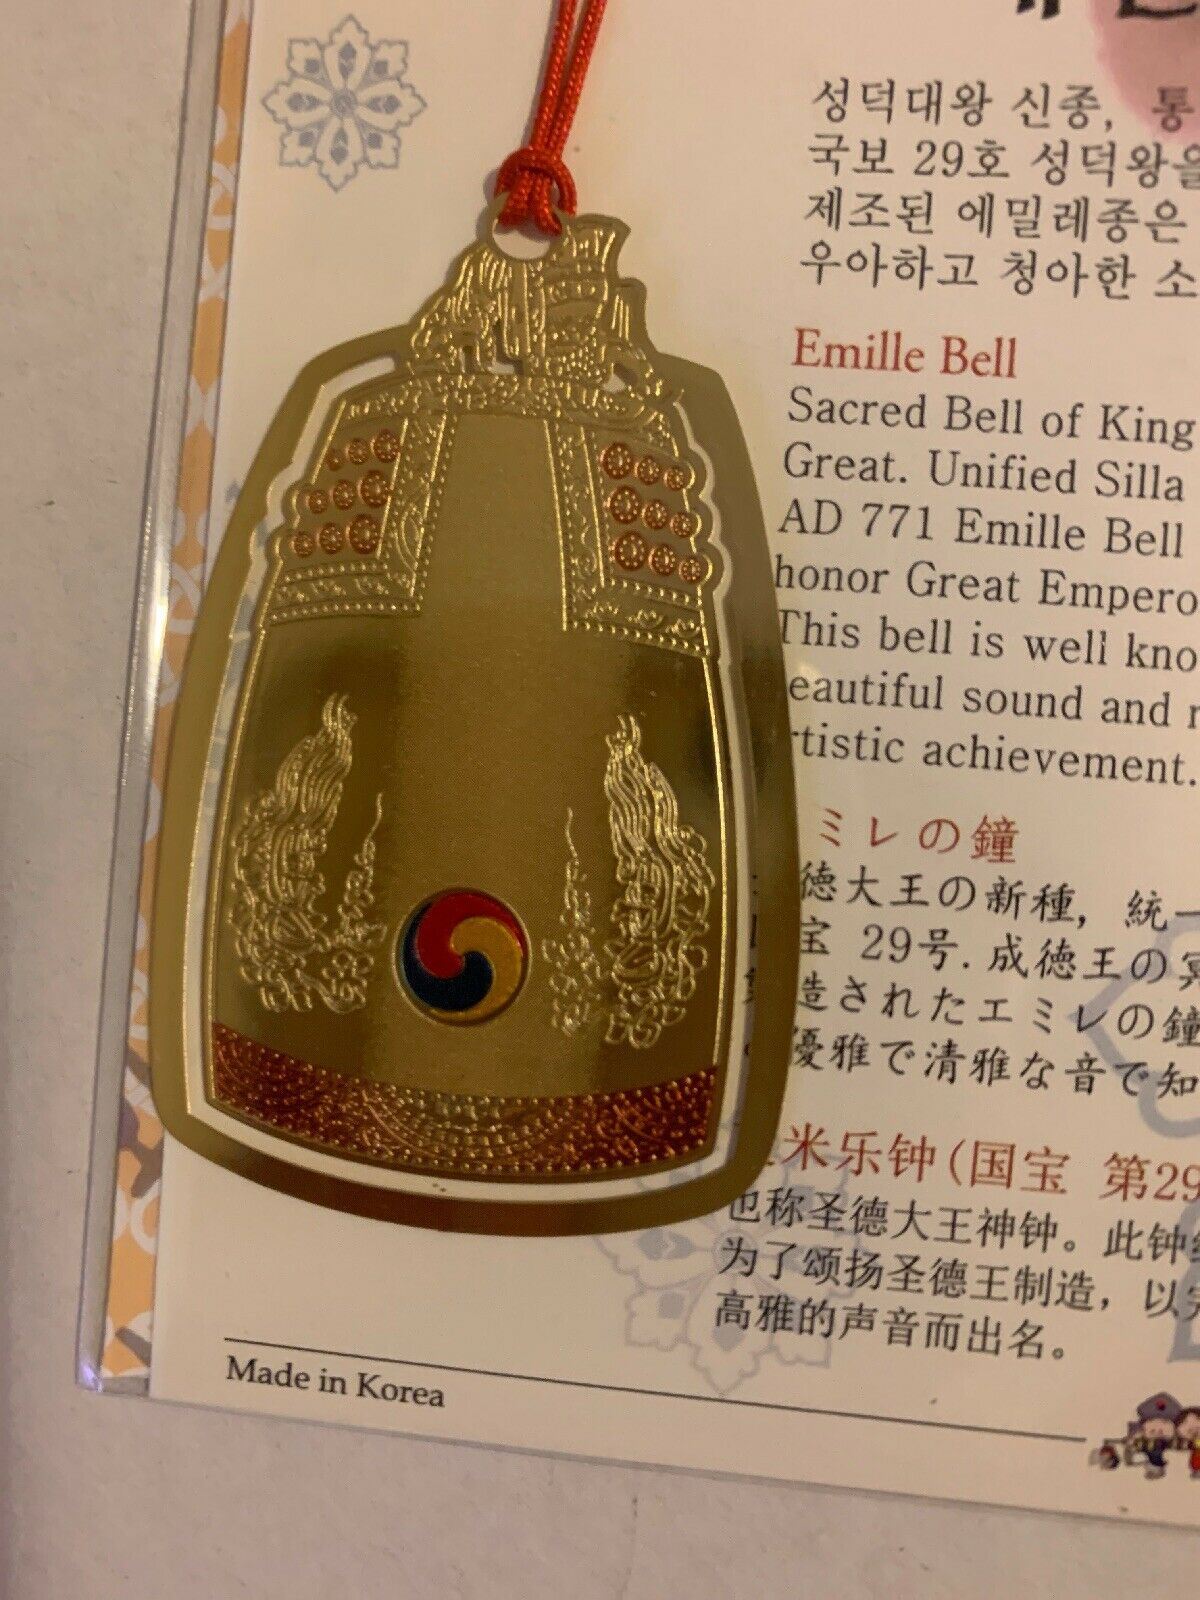 Korean Gold Plated Bookmark - Emille Bell